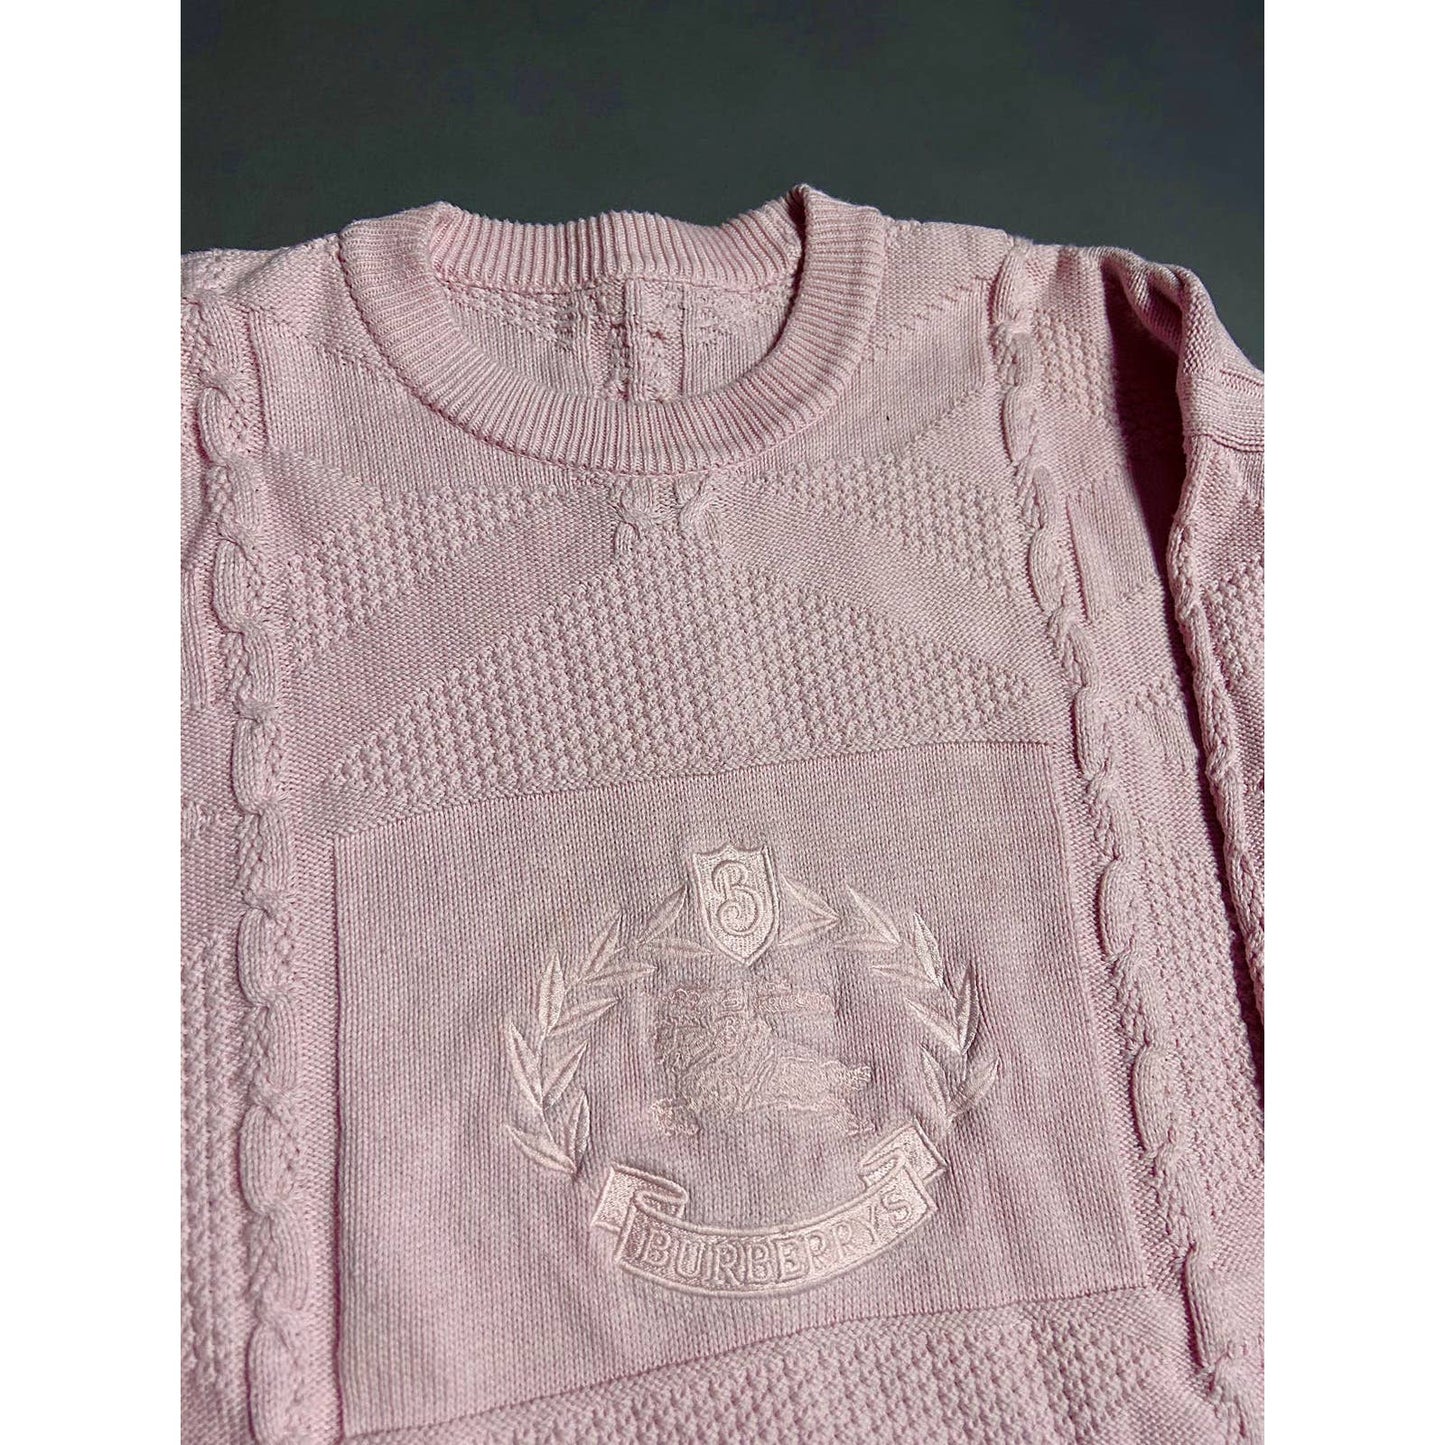 Burberrys sweater big logo vintage pink